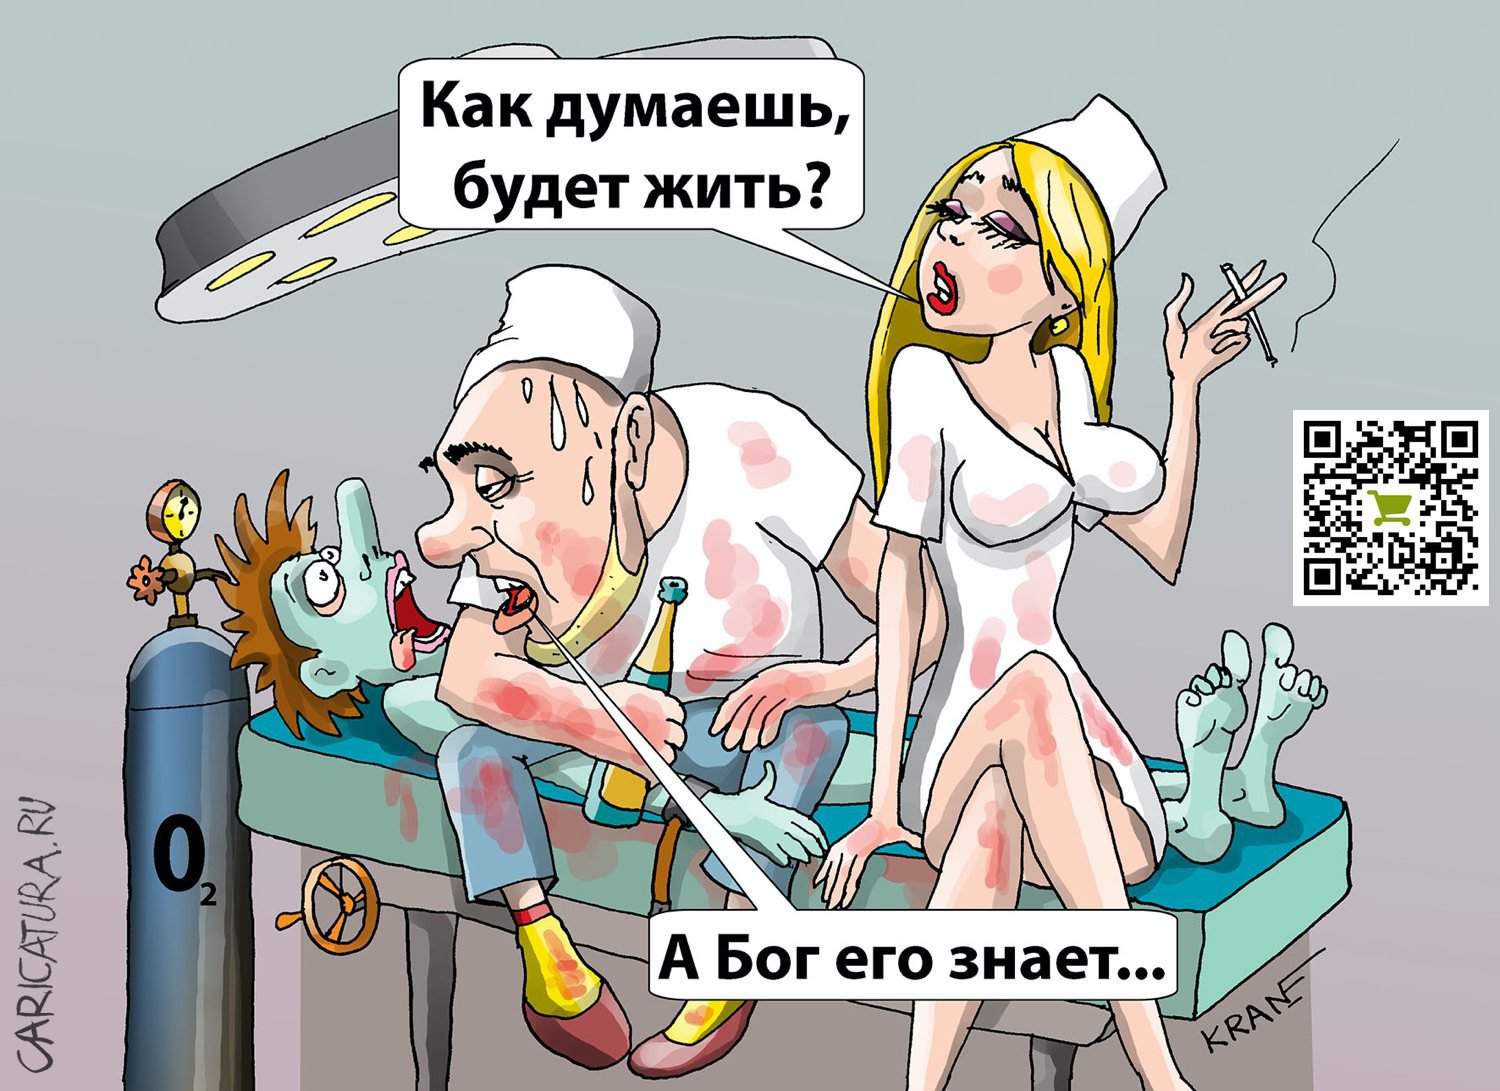 Карикатура "Прогноз результатов операции", Евгений Кран